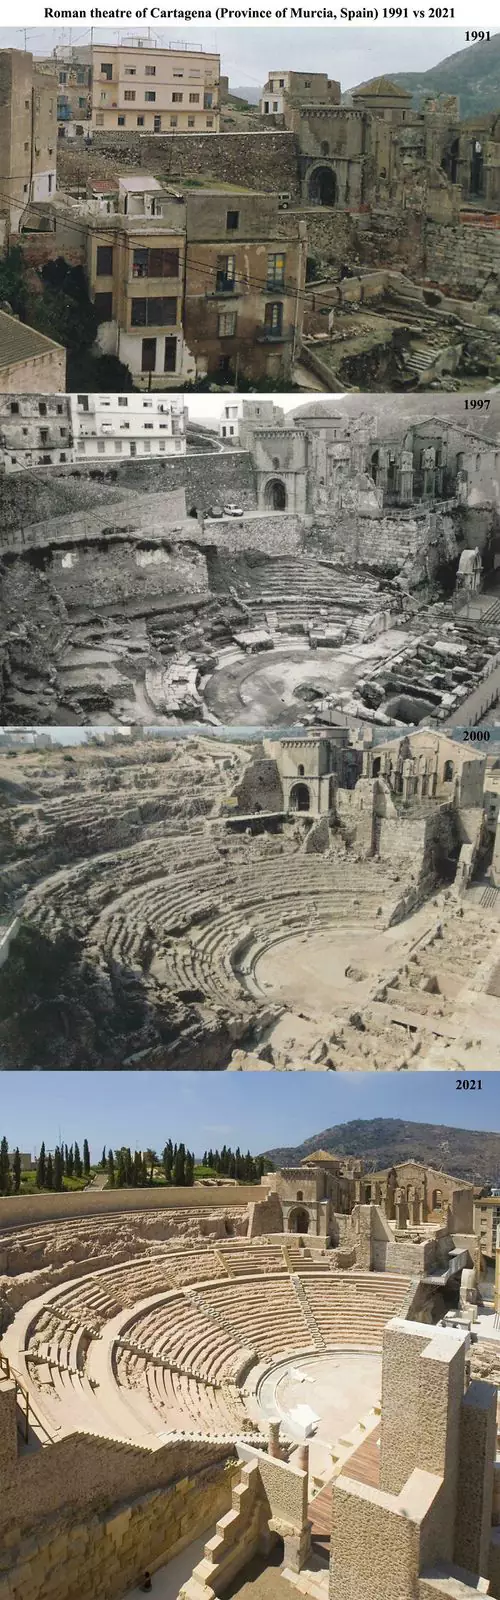 Римский театр Картахены.